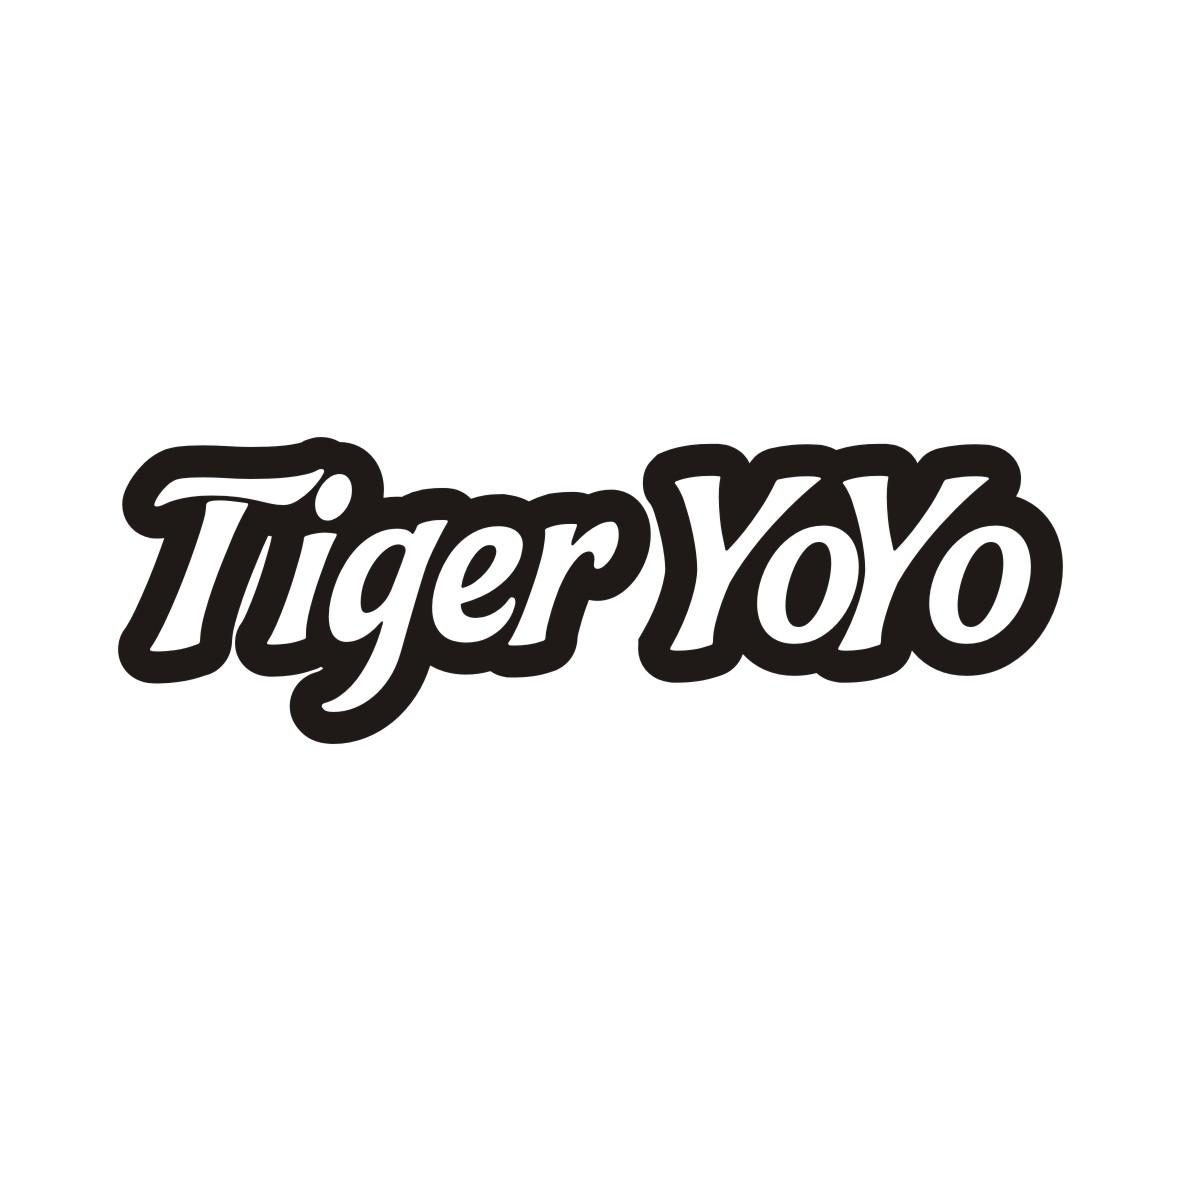 28类-健身玩具TIGER YOYO商标转让